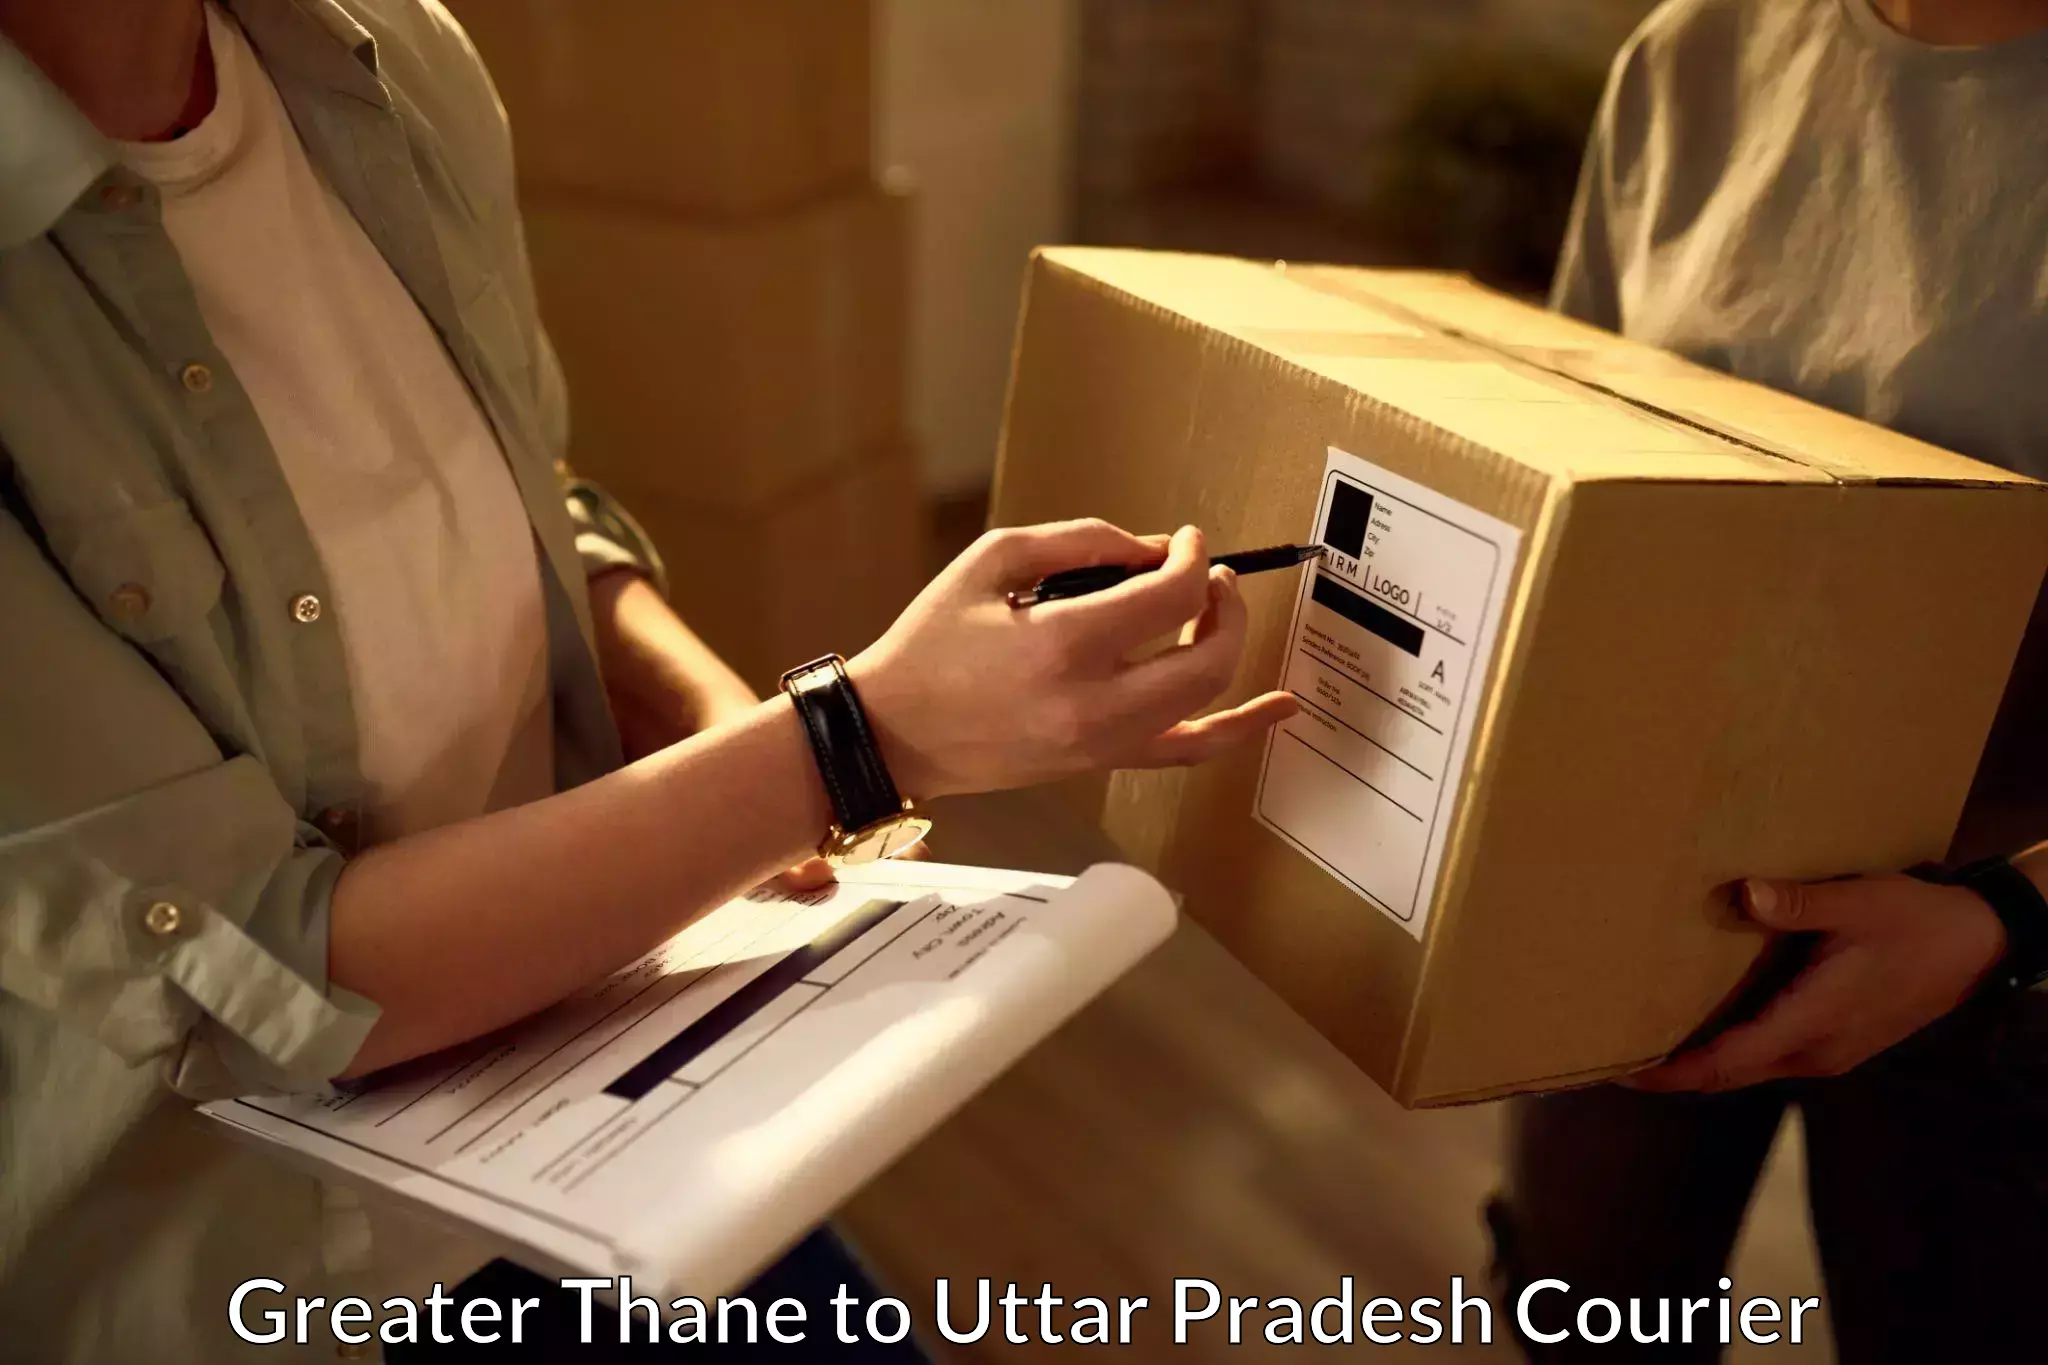 24/7 courier service Greater Thane to Uttar Pradesh